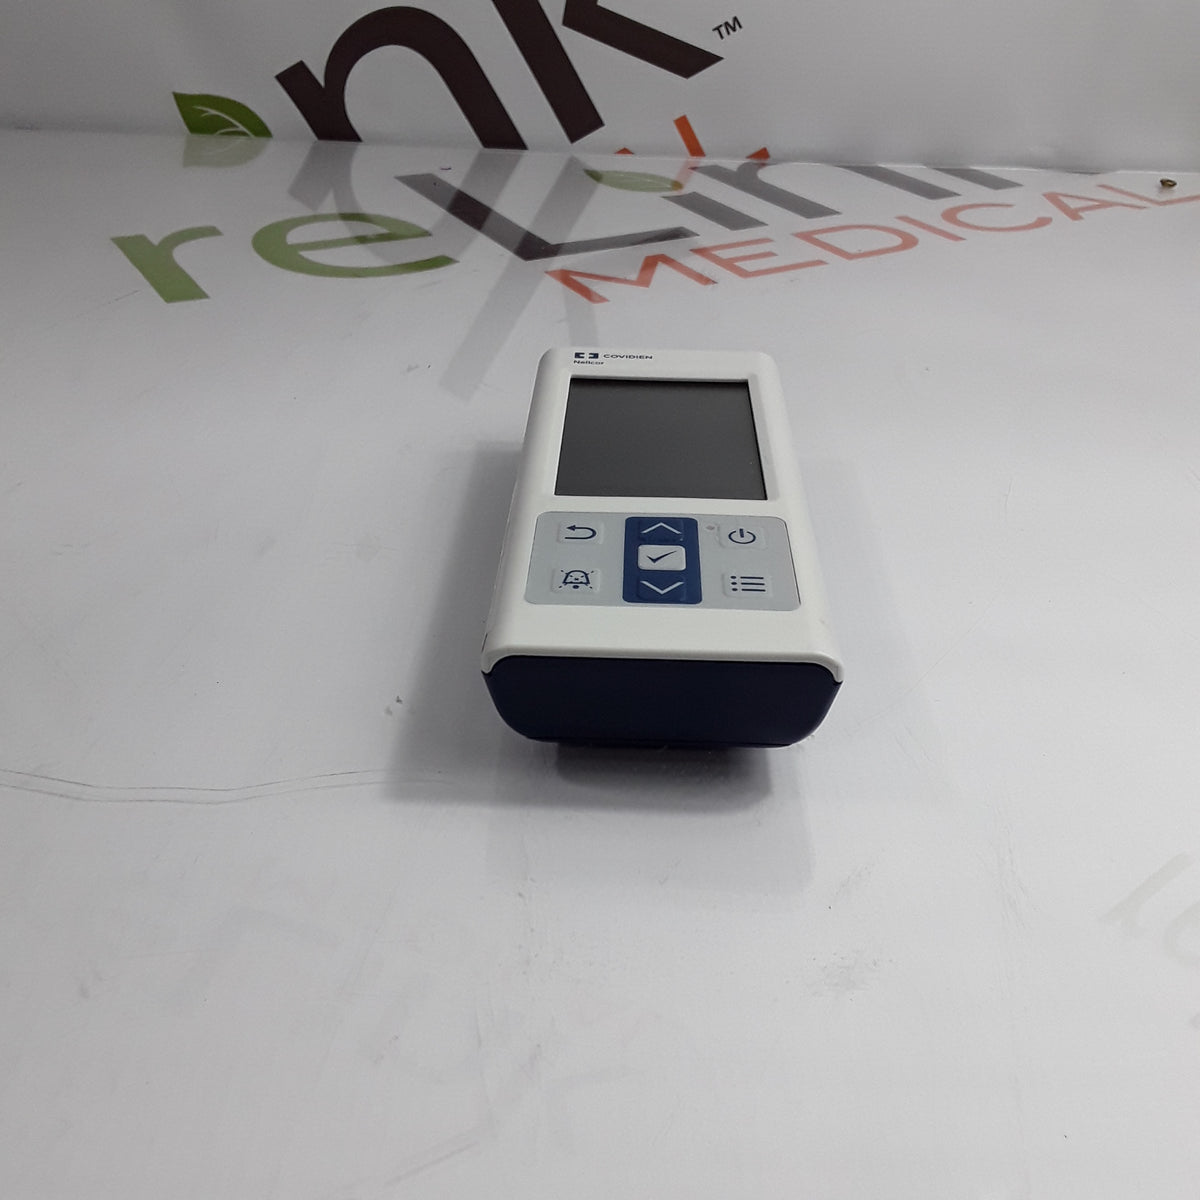 Covidien PM10N Nellcor Portable SpO2 Patient Monitoring System — reLink ...